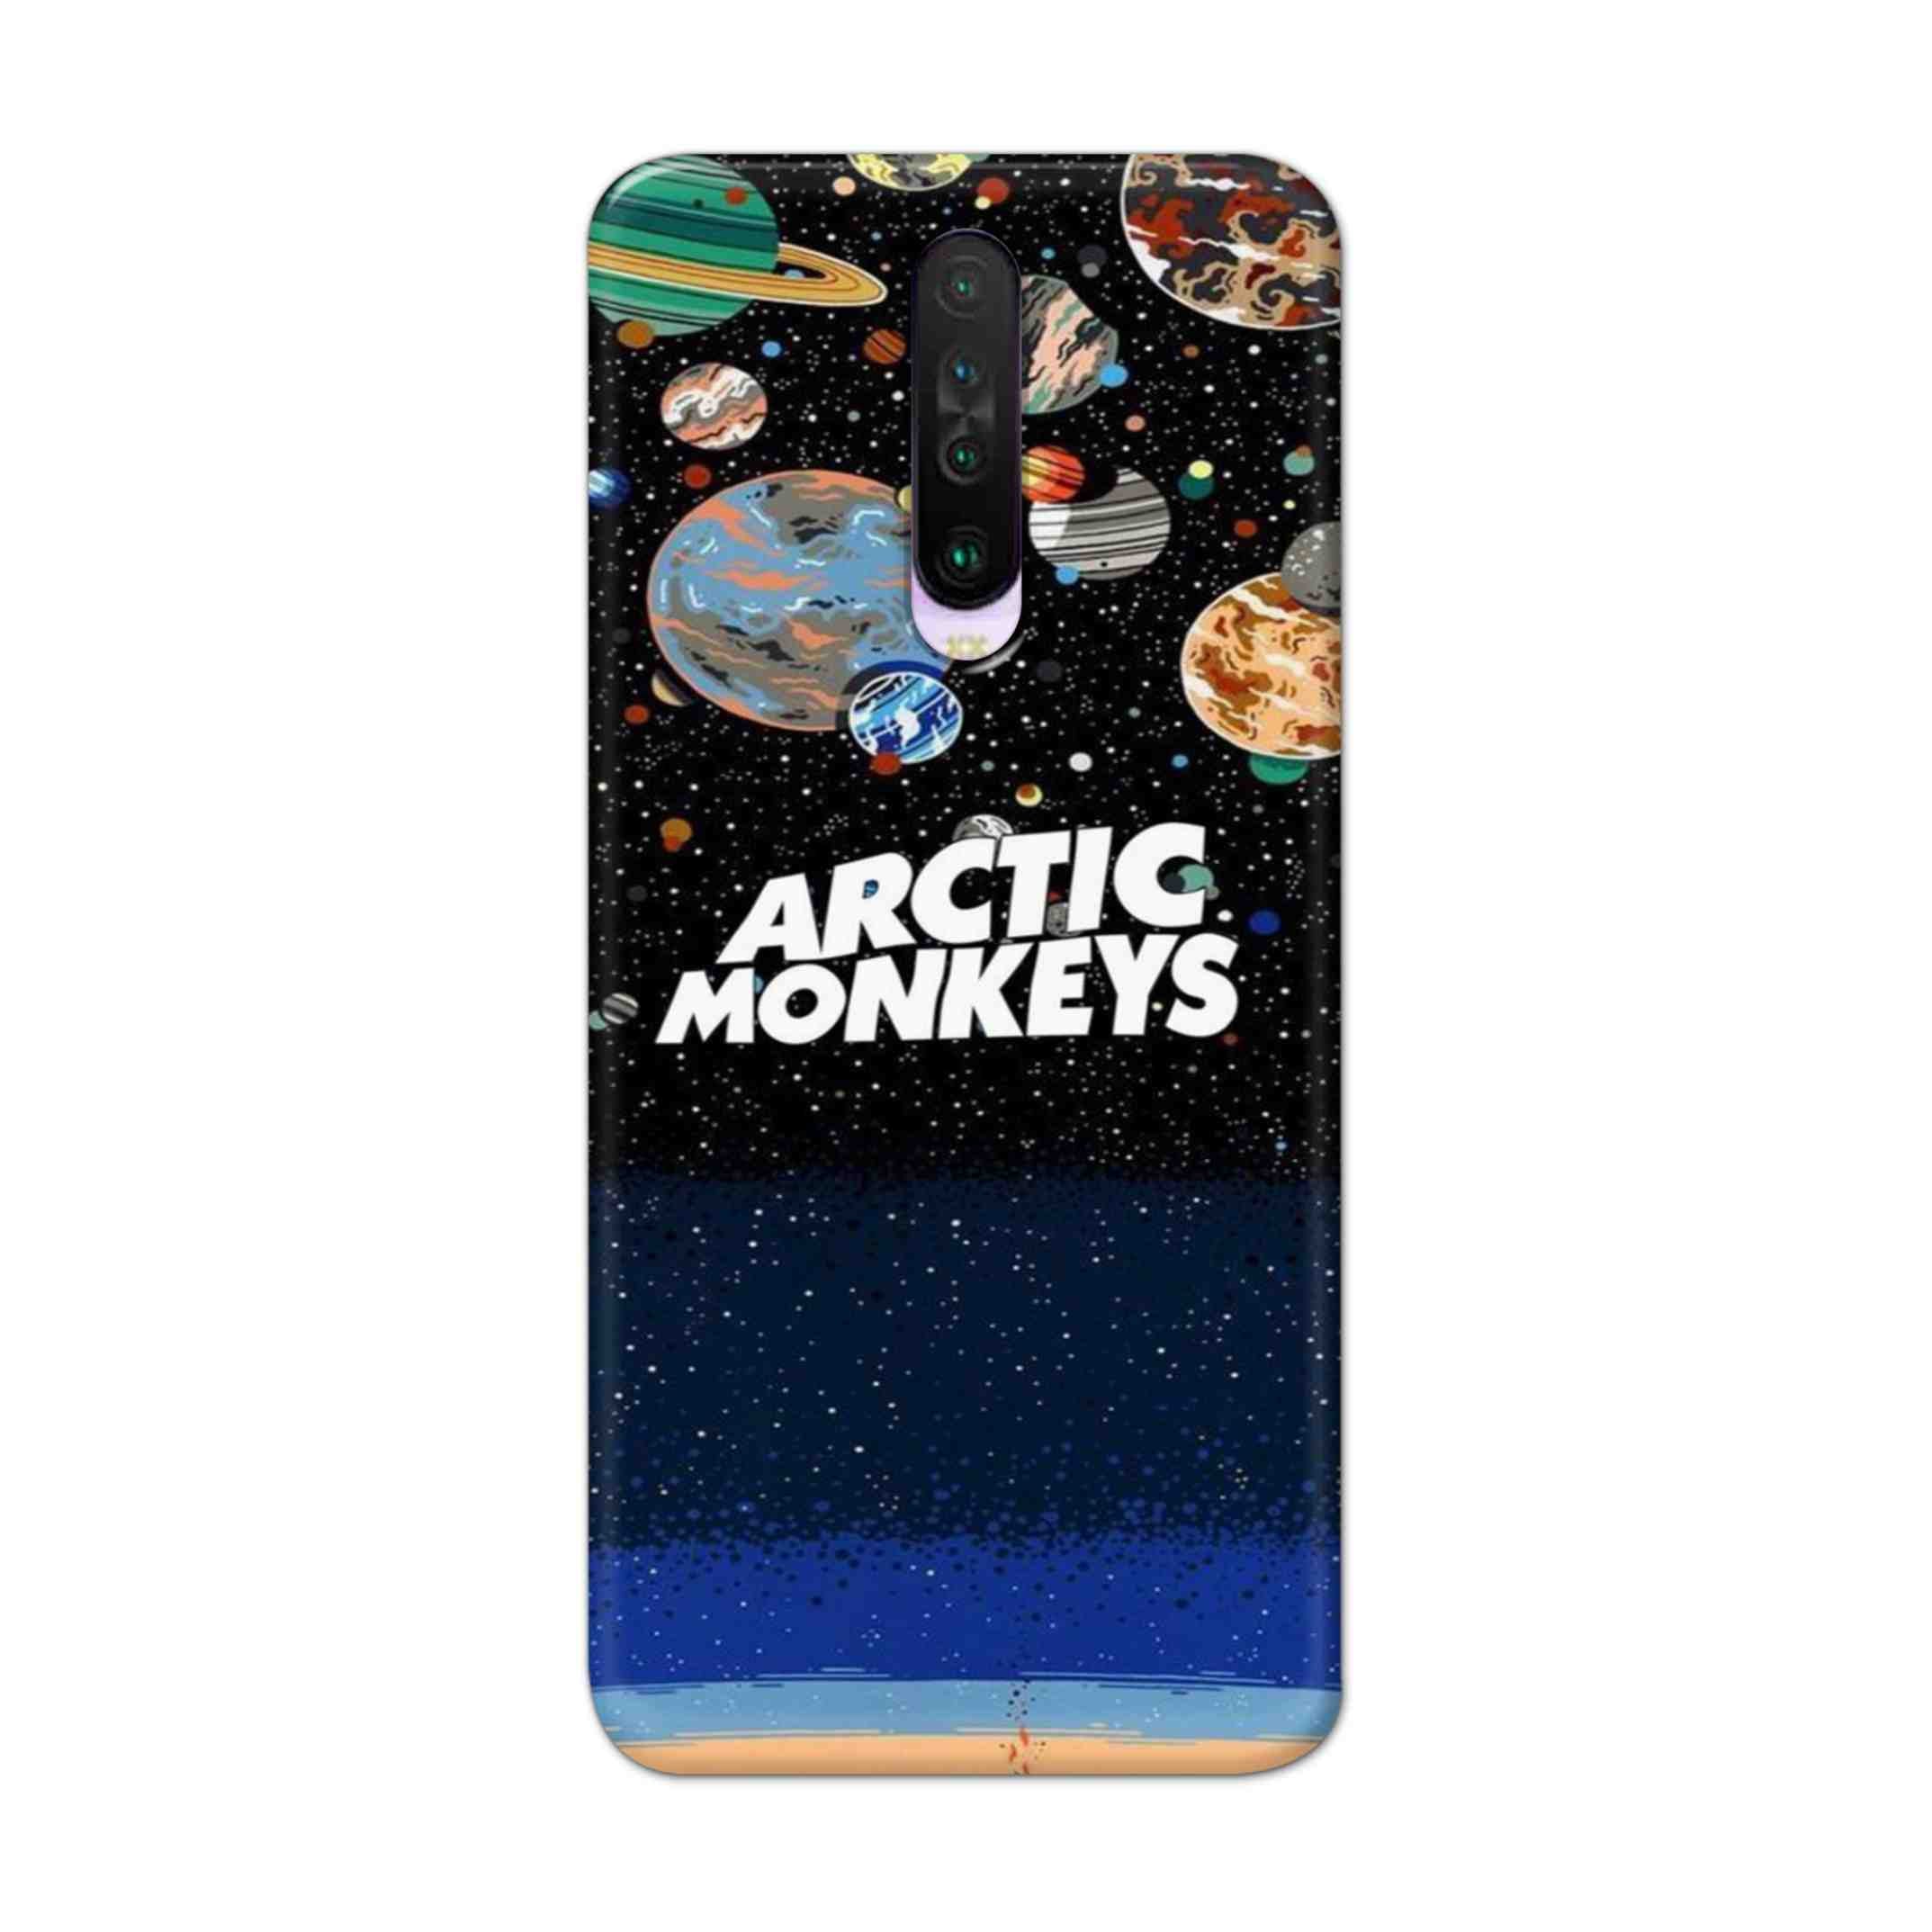 Buy Artic Monkeys Hard Back Mobile Phone Case Cover For Poco X2 Online